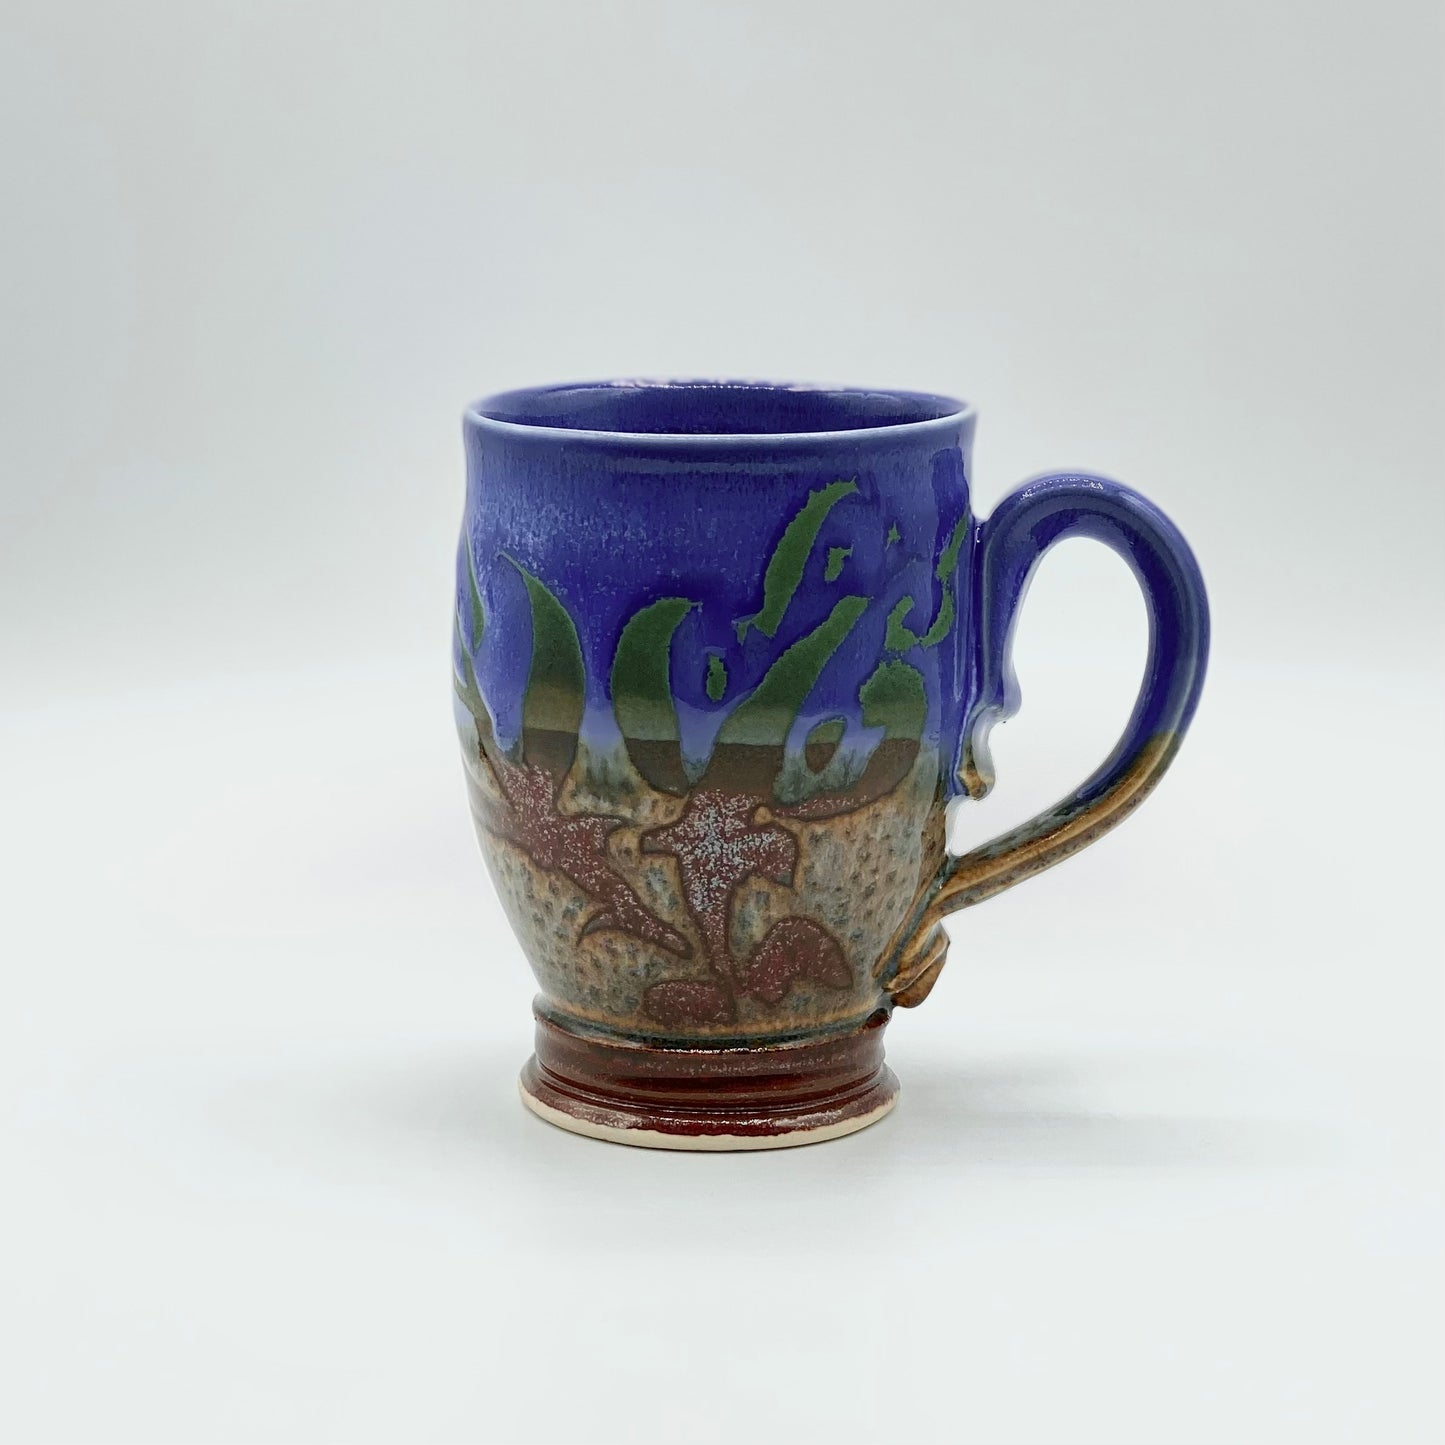 Mug by Peter Thomas Pottery